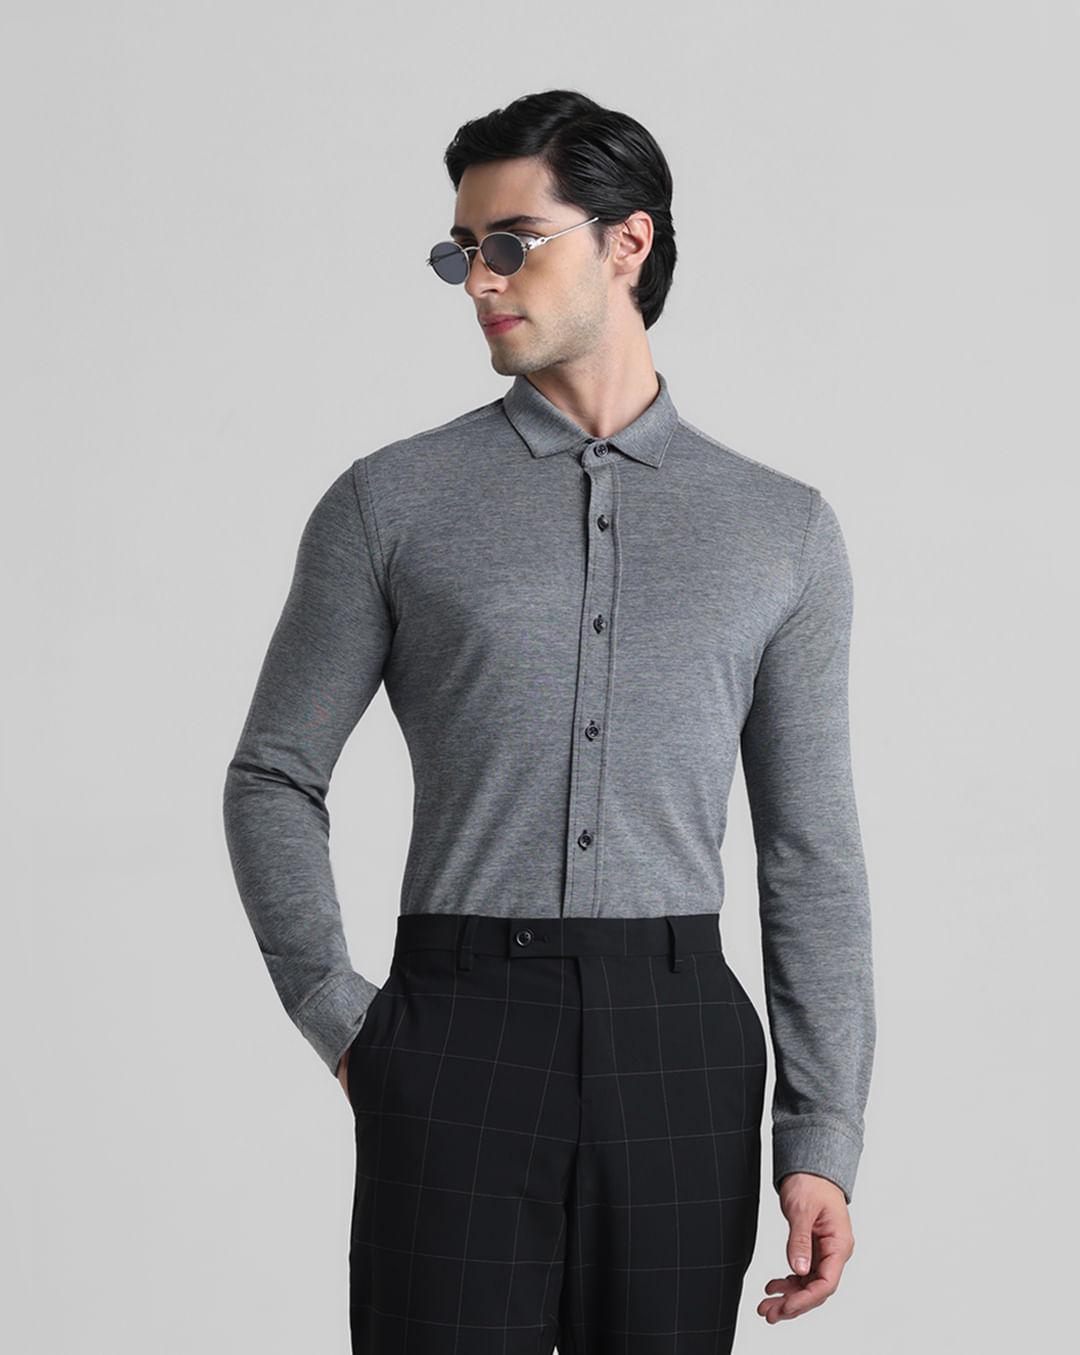 grey knitted full sleeves shirt